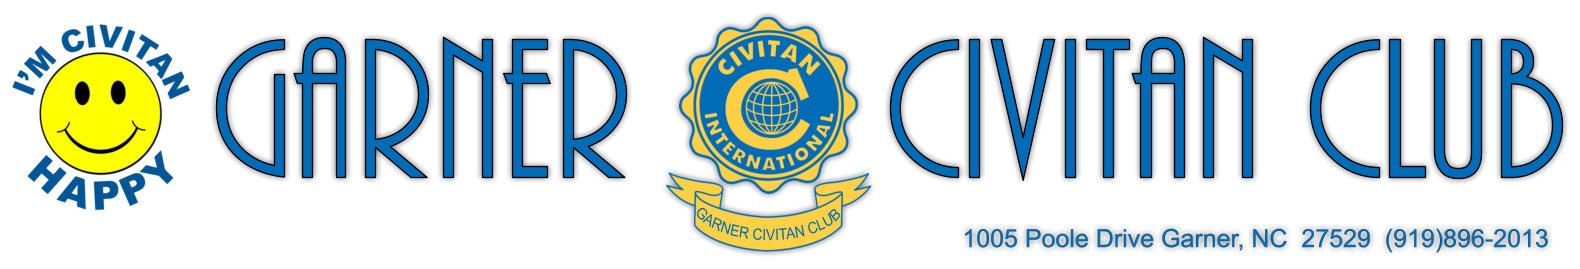 Garner Civitan Club - 1